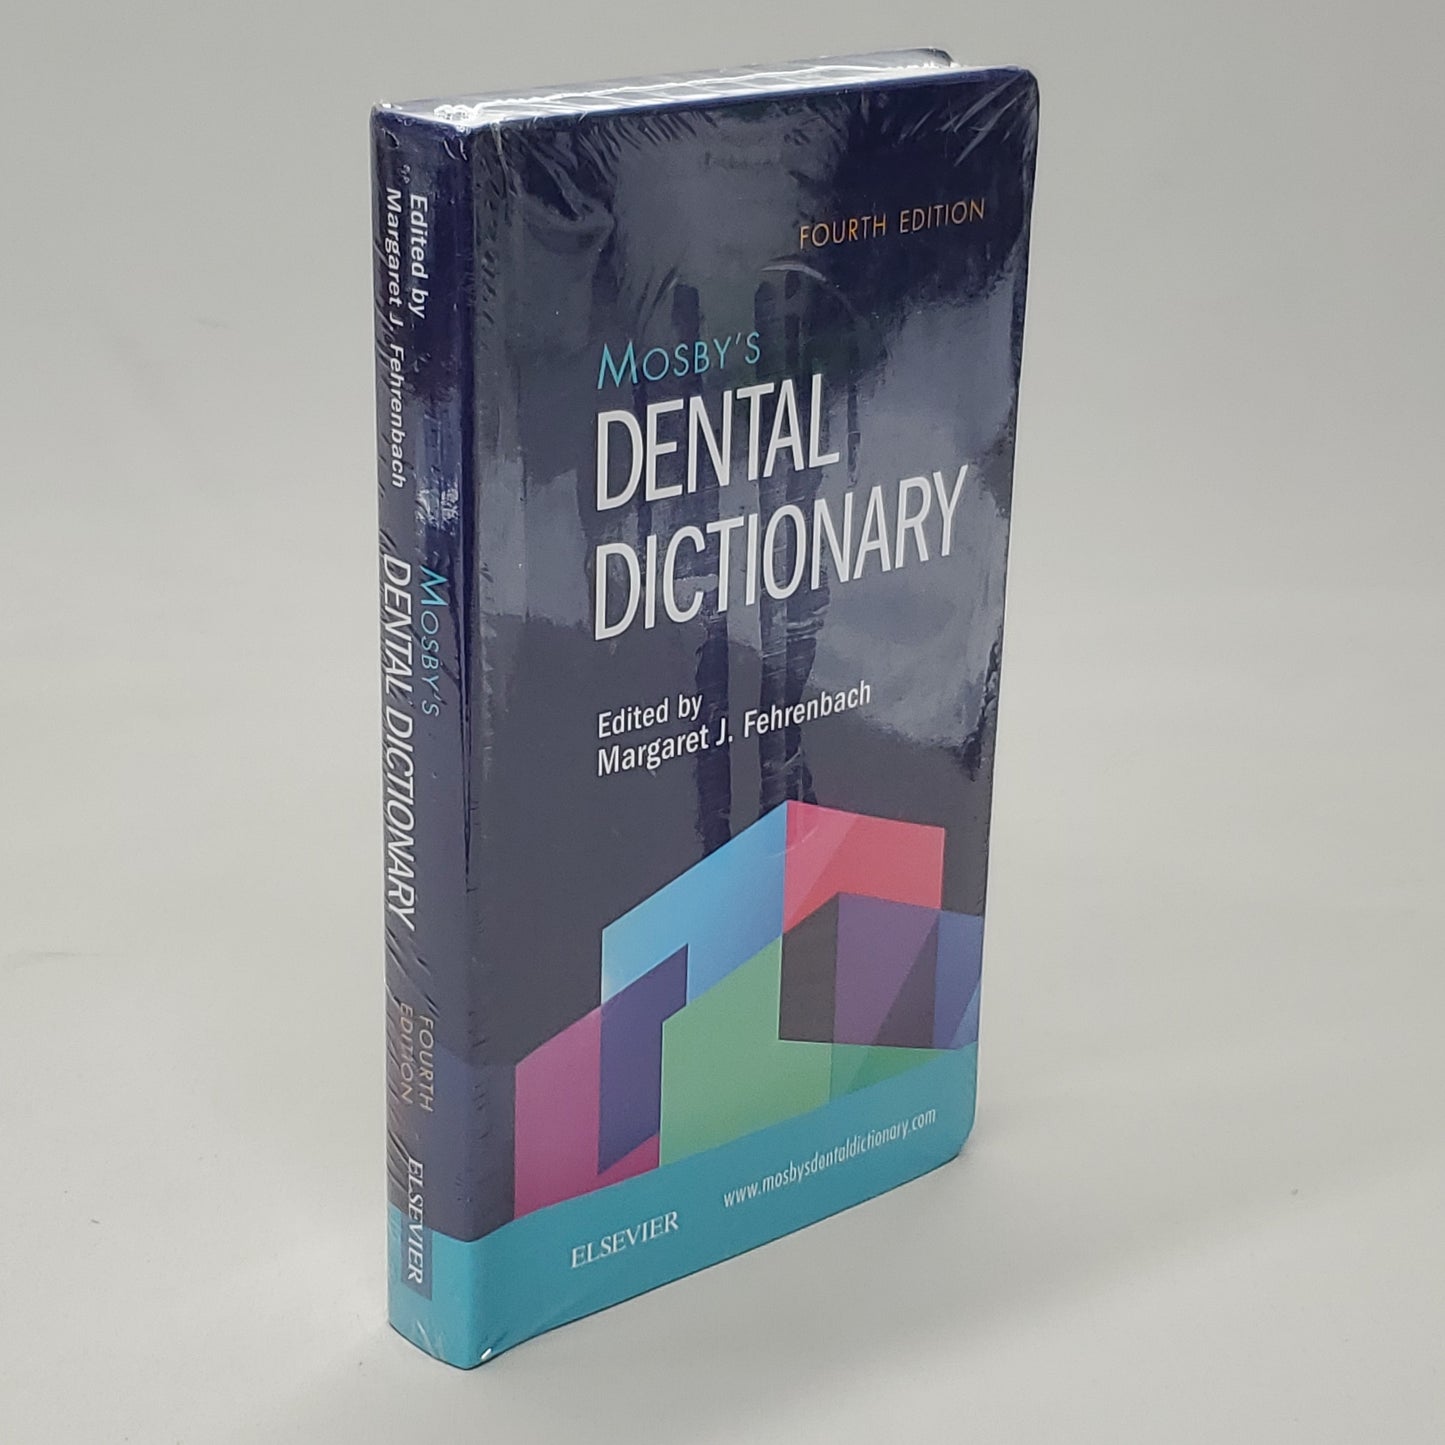 MOSBY'S Dental Dictionary Fourth Edition Textbook Edited by Margaret J. Fehrenback (New)